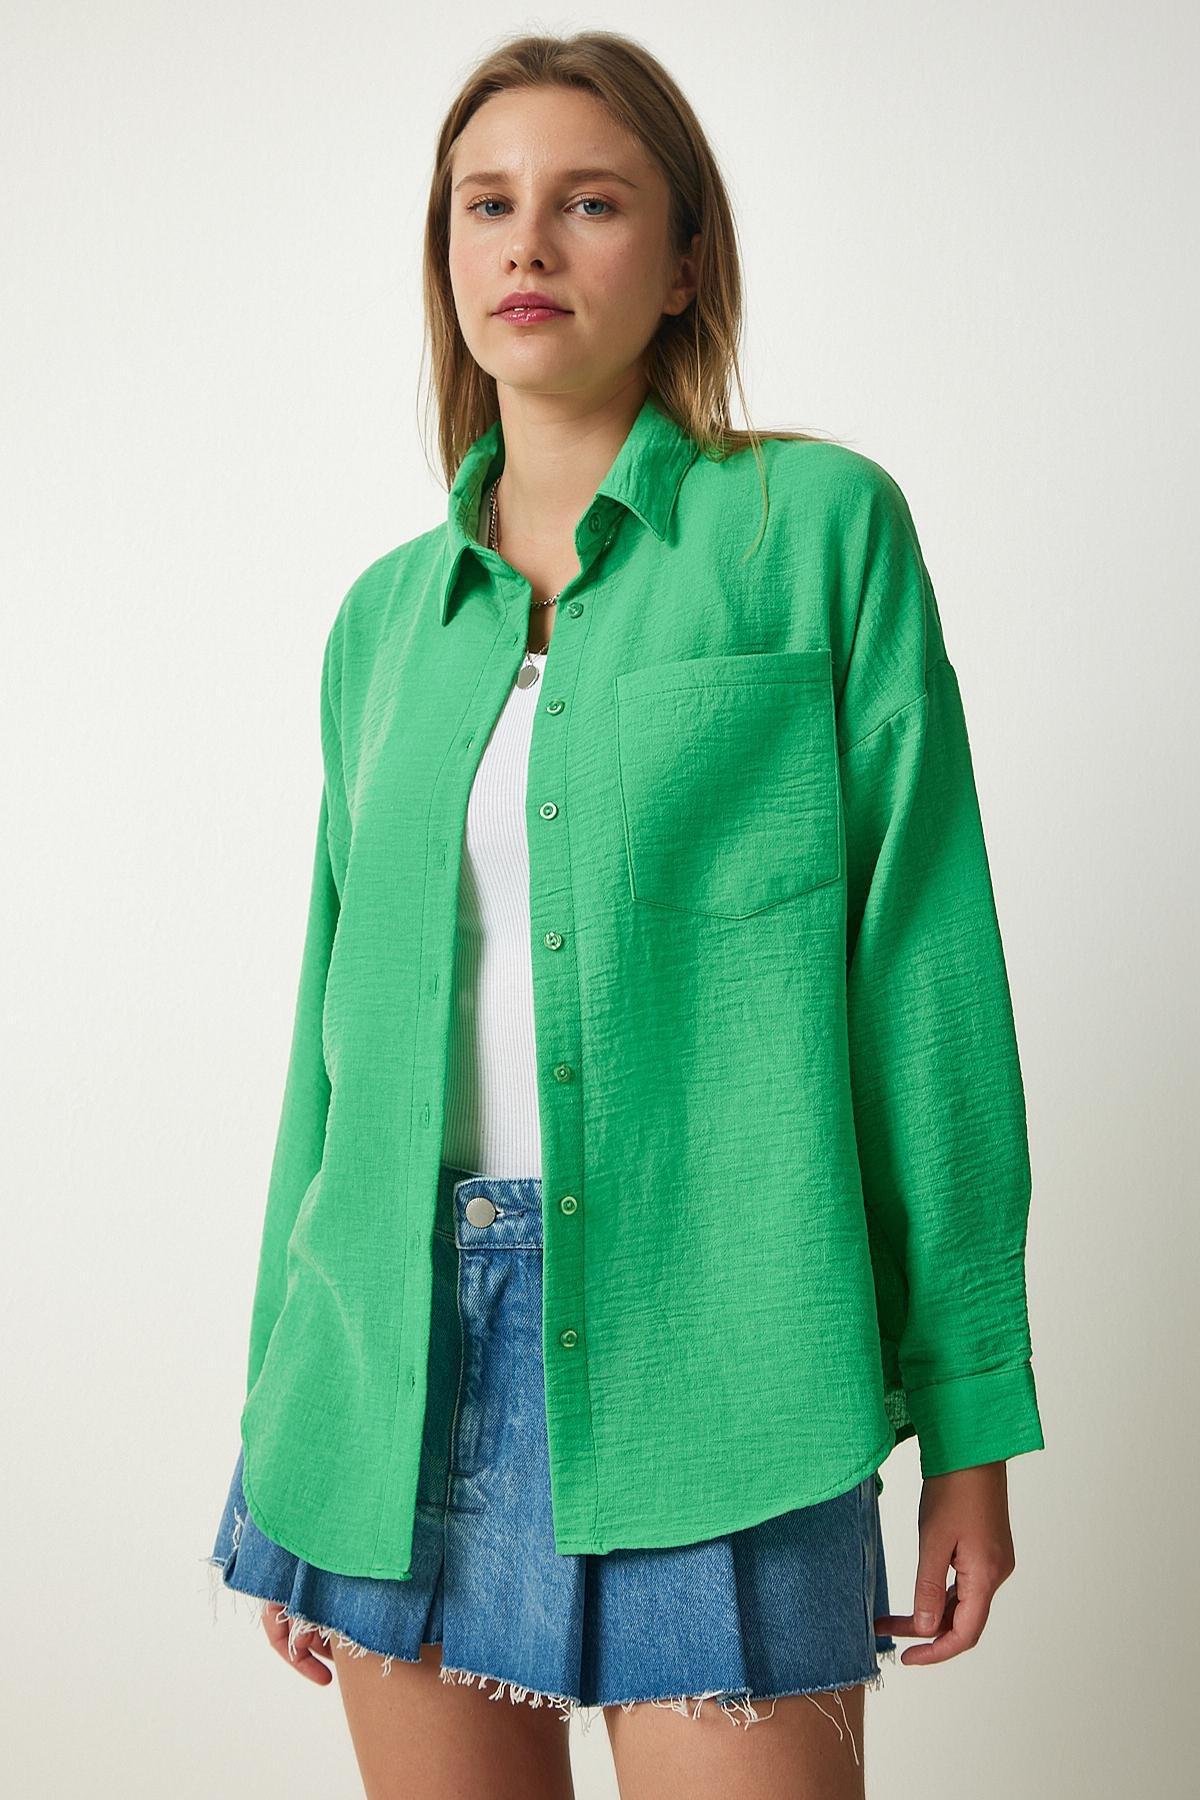 Happiness Istanbul - Green Oversize Linen Shirt